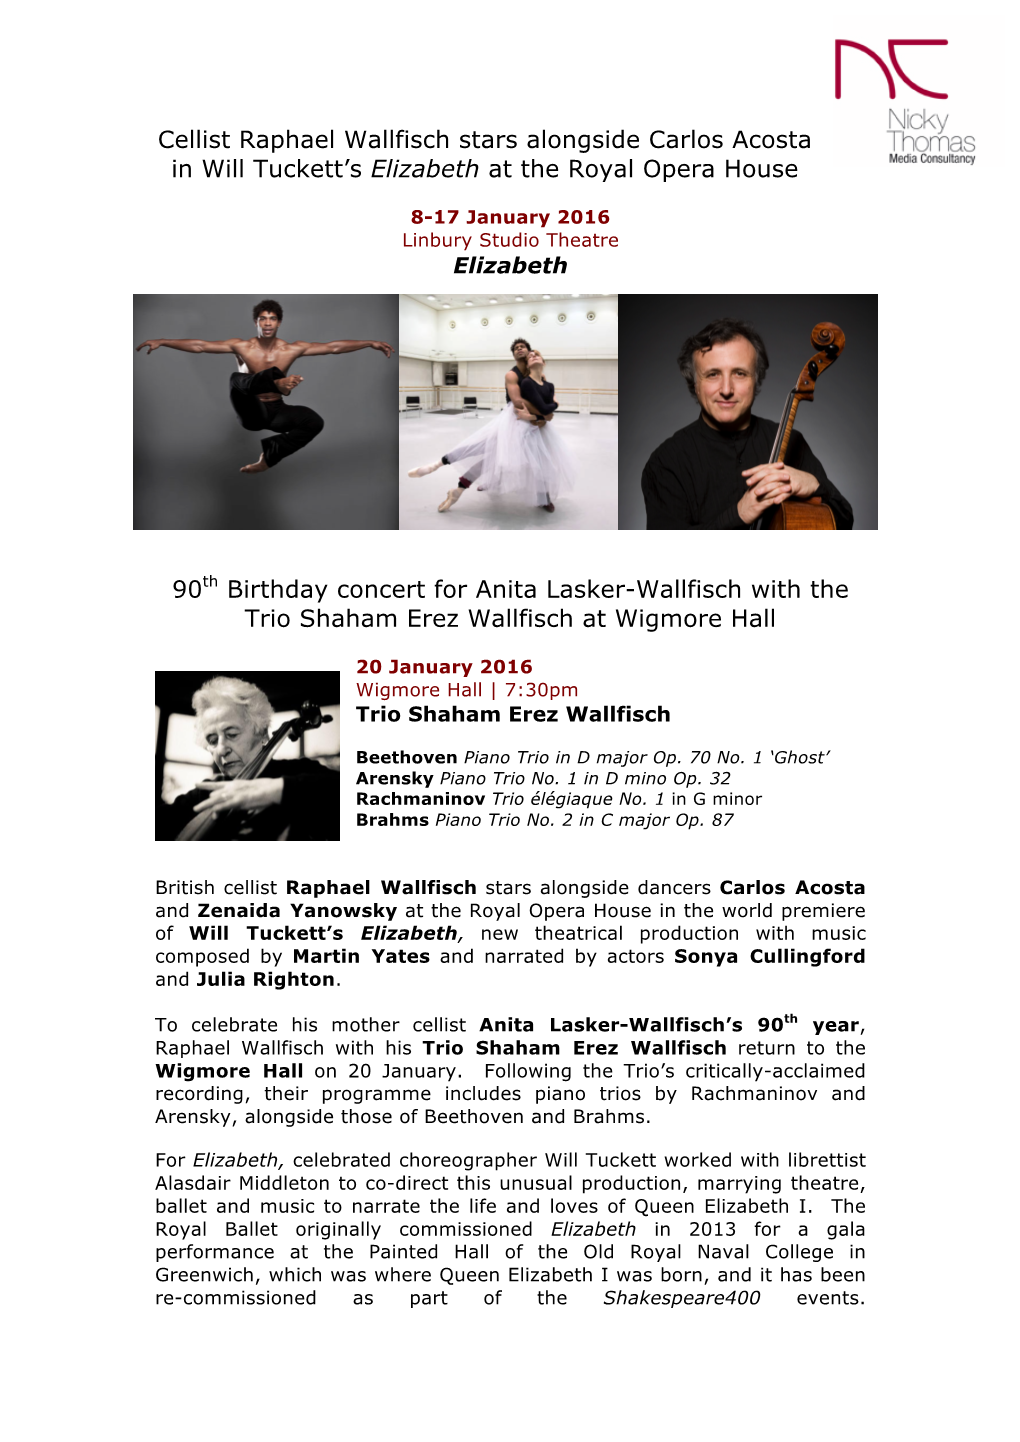 Cellist Raphael Wallfisch Stars Alongside Carlos Acosta in Will Tuckett’S Elizabeth at the Royal Opera House